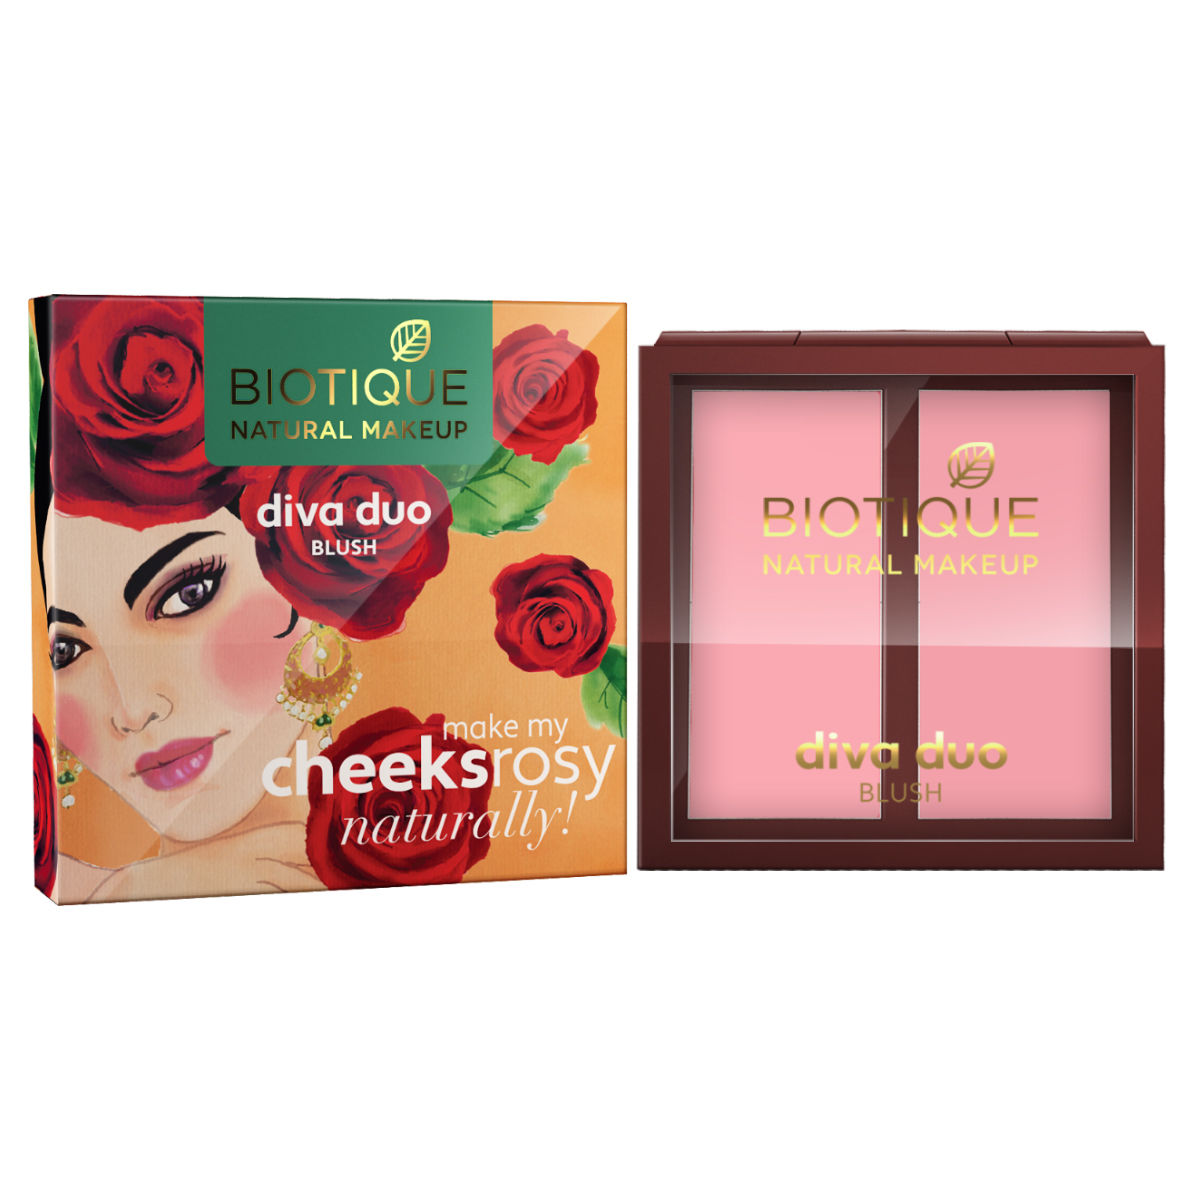 Buy Biotique Natural Makeup Diva Duo Blush (Rose-N-Radiance)(9 g) - Purplle